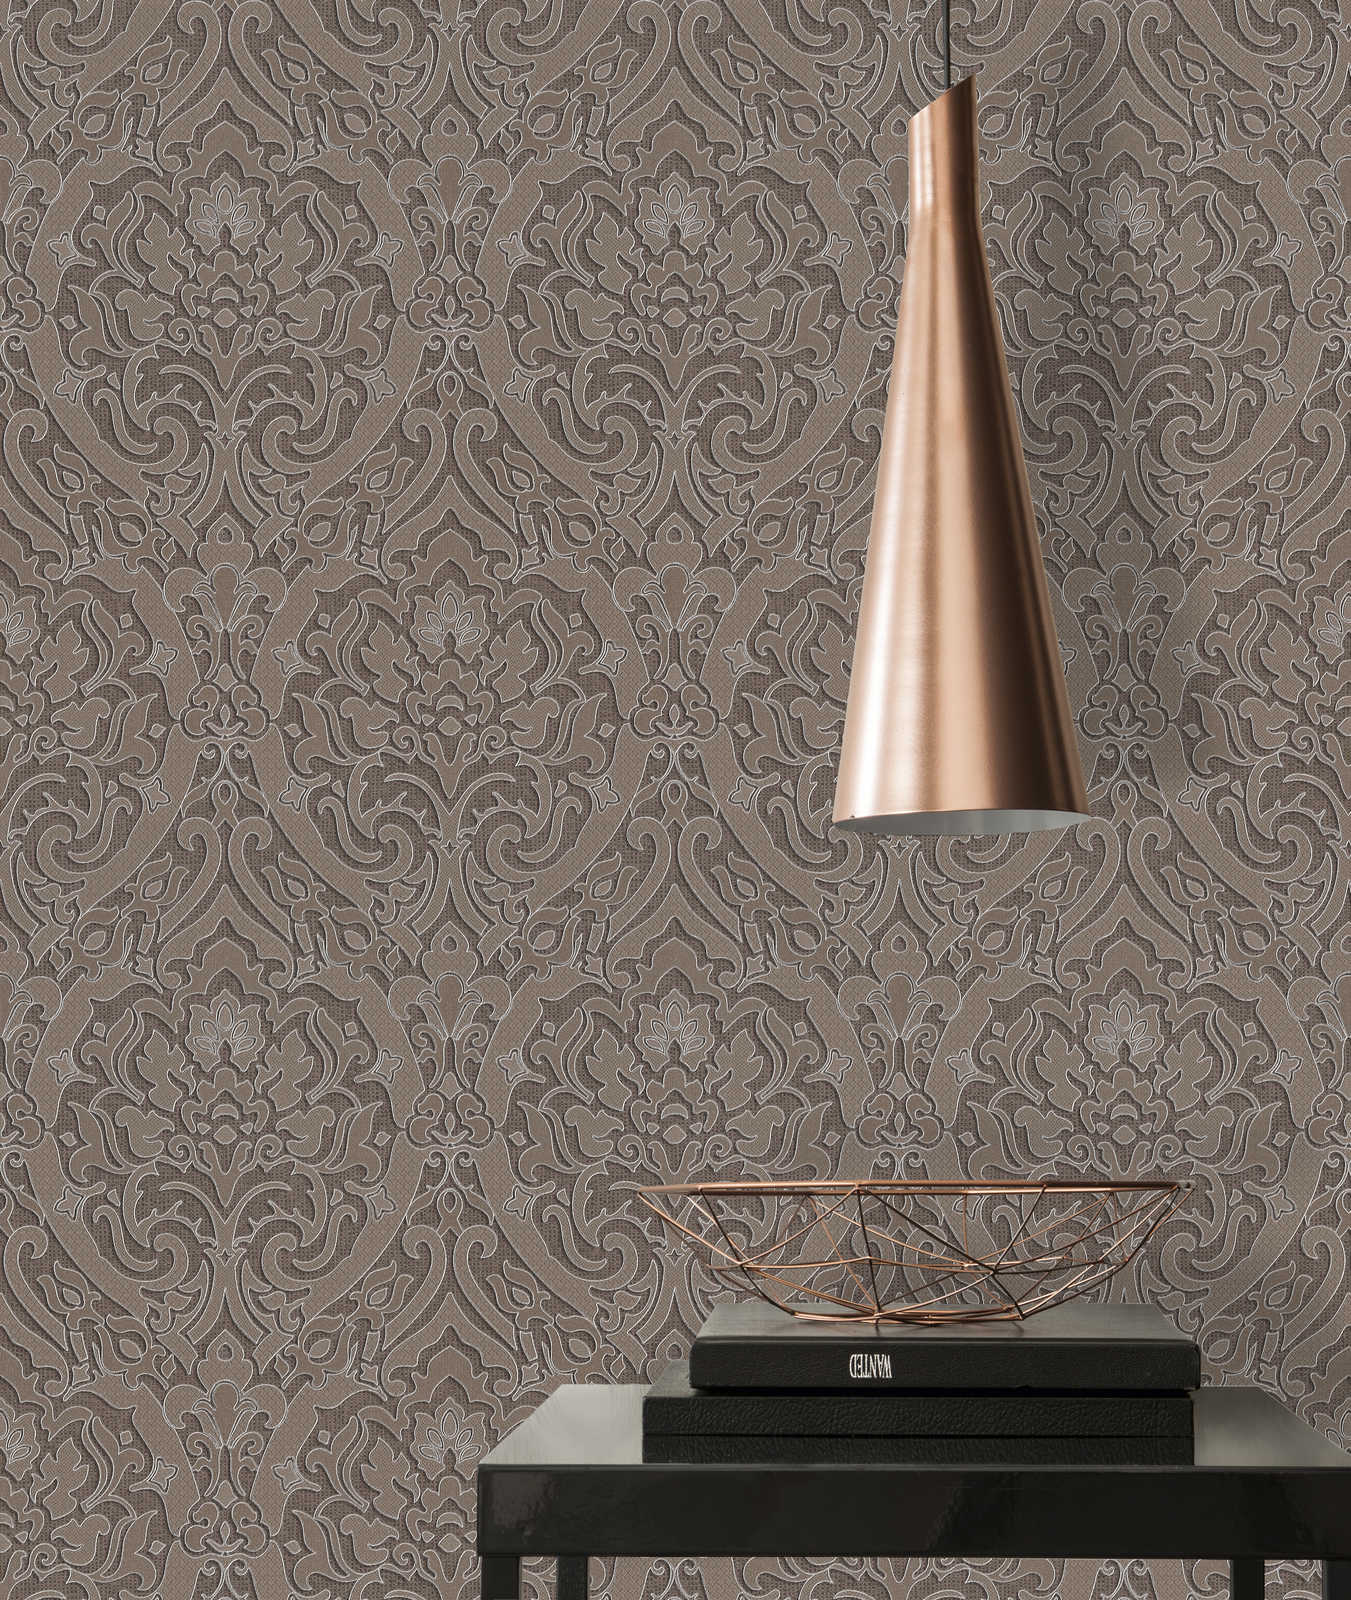             Ornament Tapete mit 3D Design & Strukturmusterung – Braun, Metallic
        